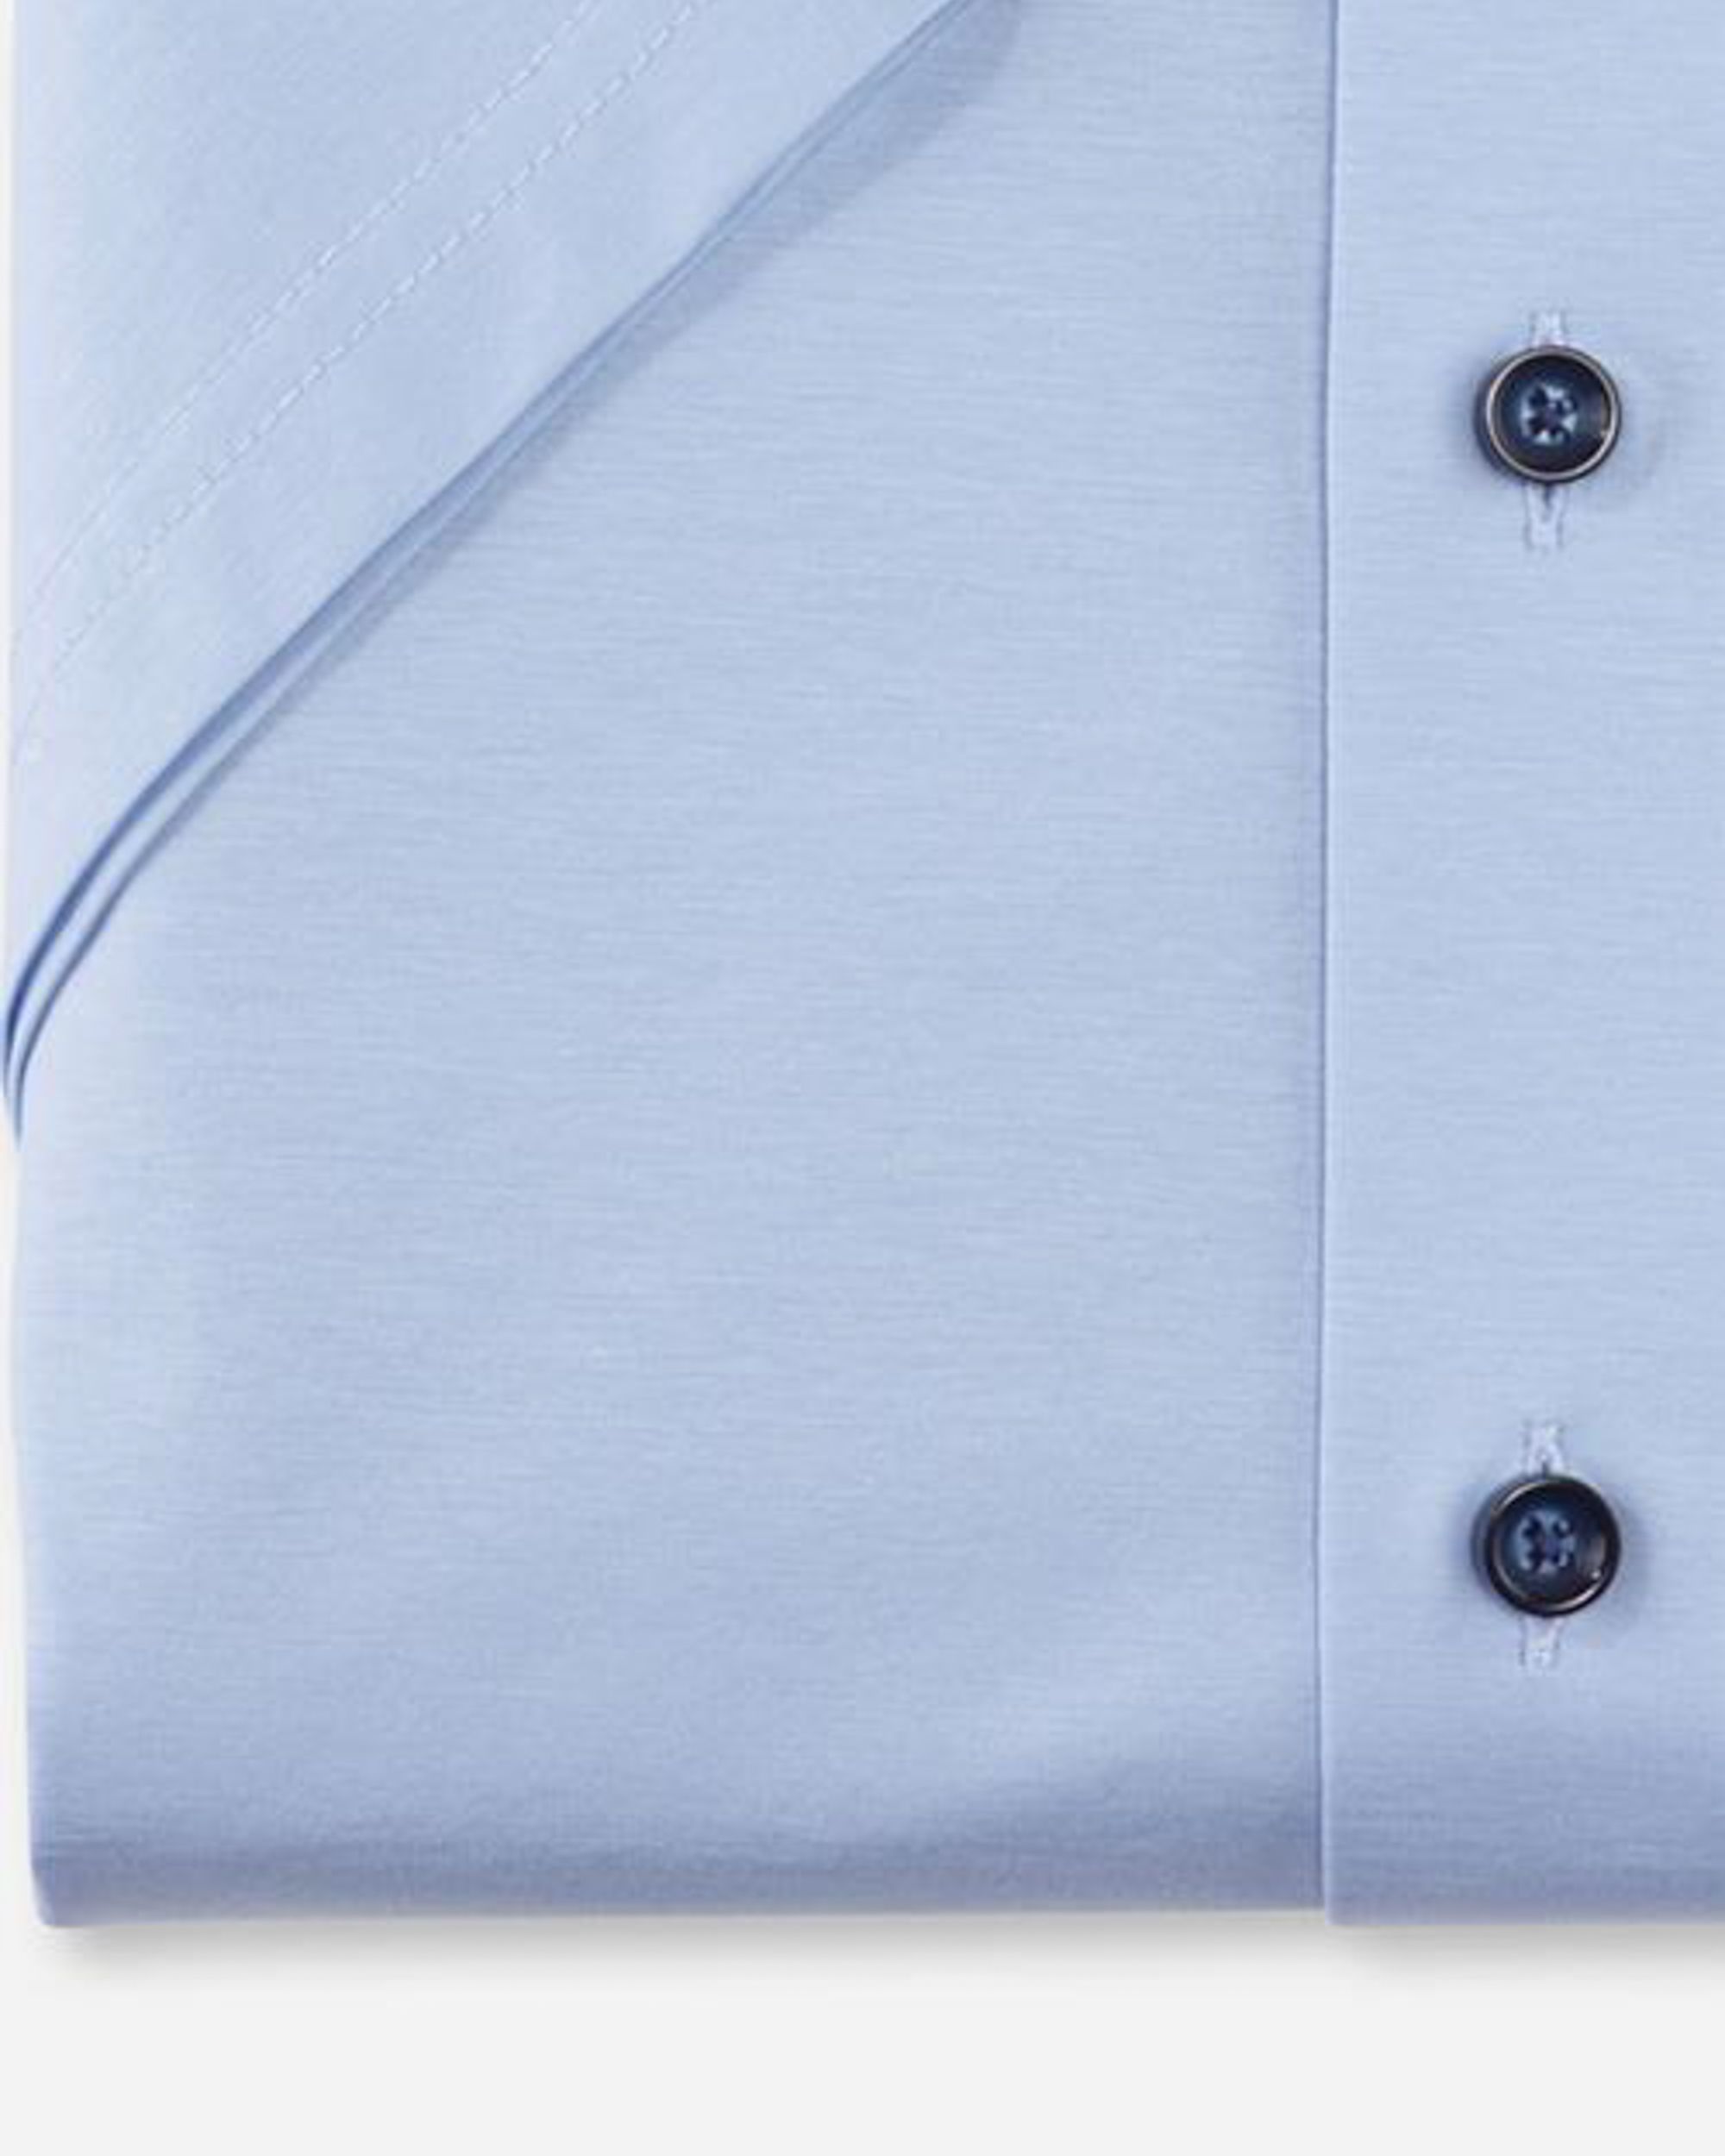 OLYMP 24/Seven Modern Fit Overhemd KM Blauw 074110-001-37